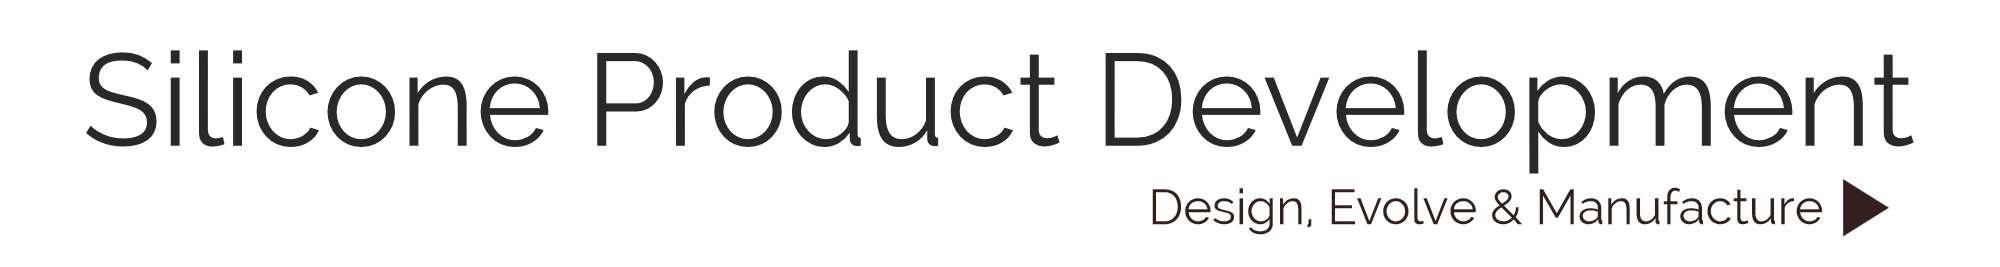 Silicone Product Development: Design, Evolve & Manufacture Silicone Products